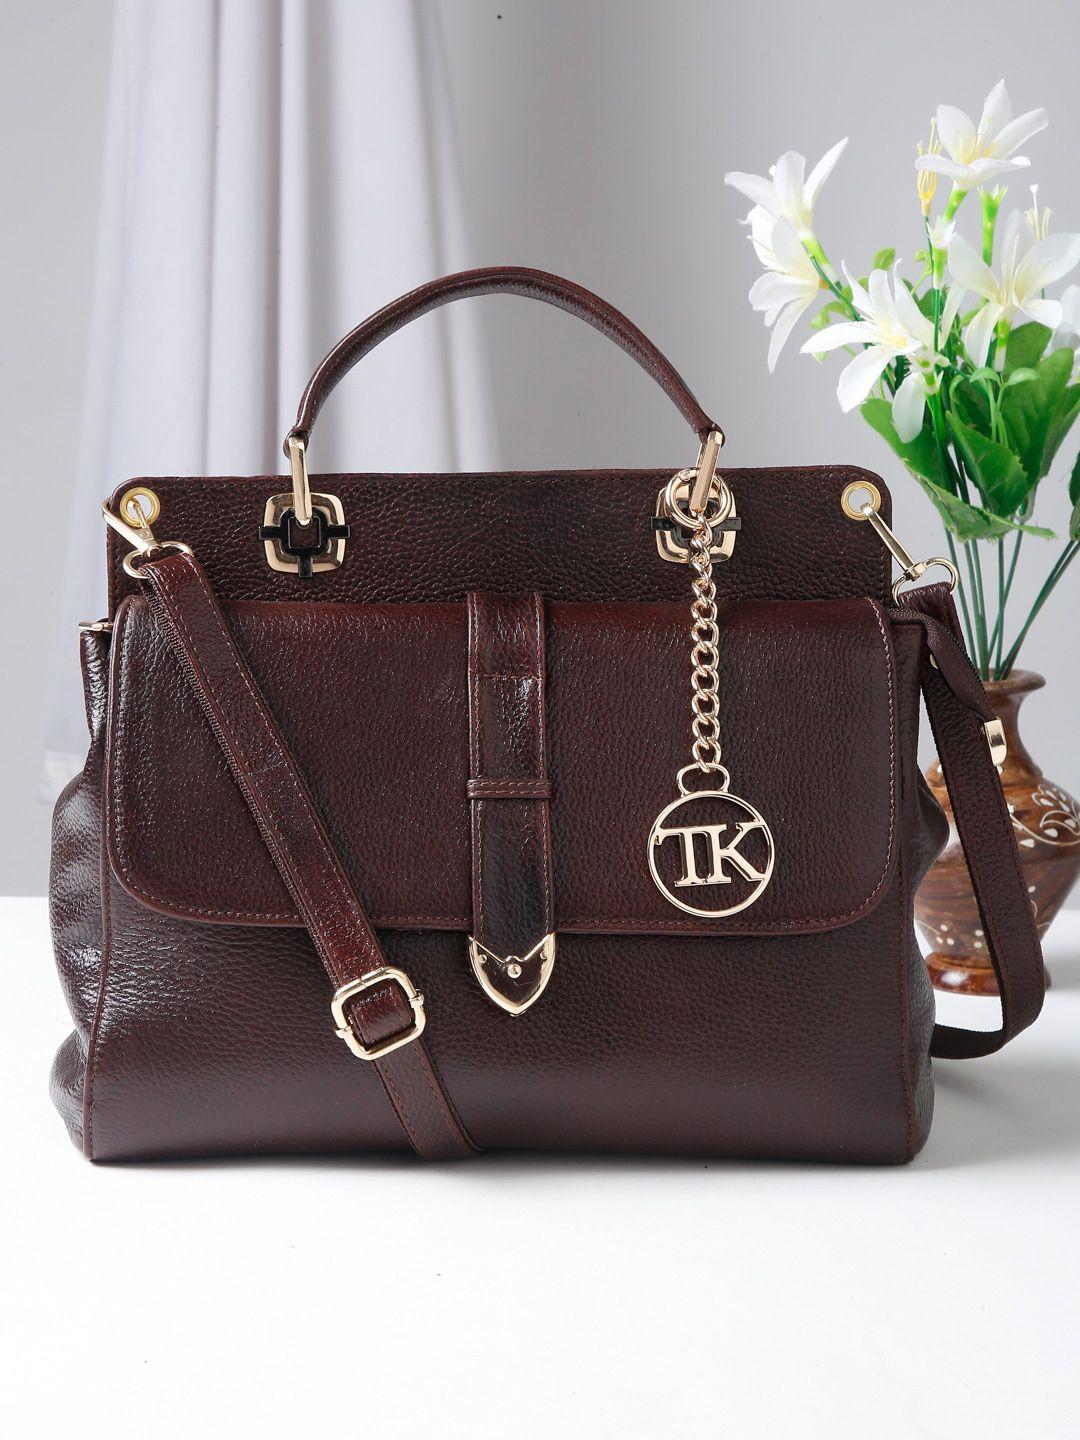 teakwood leathers textured leather structured handheld bag